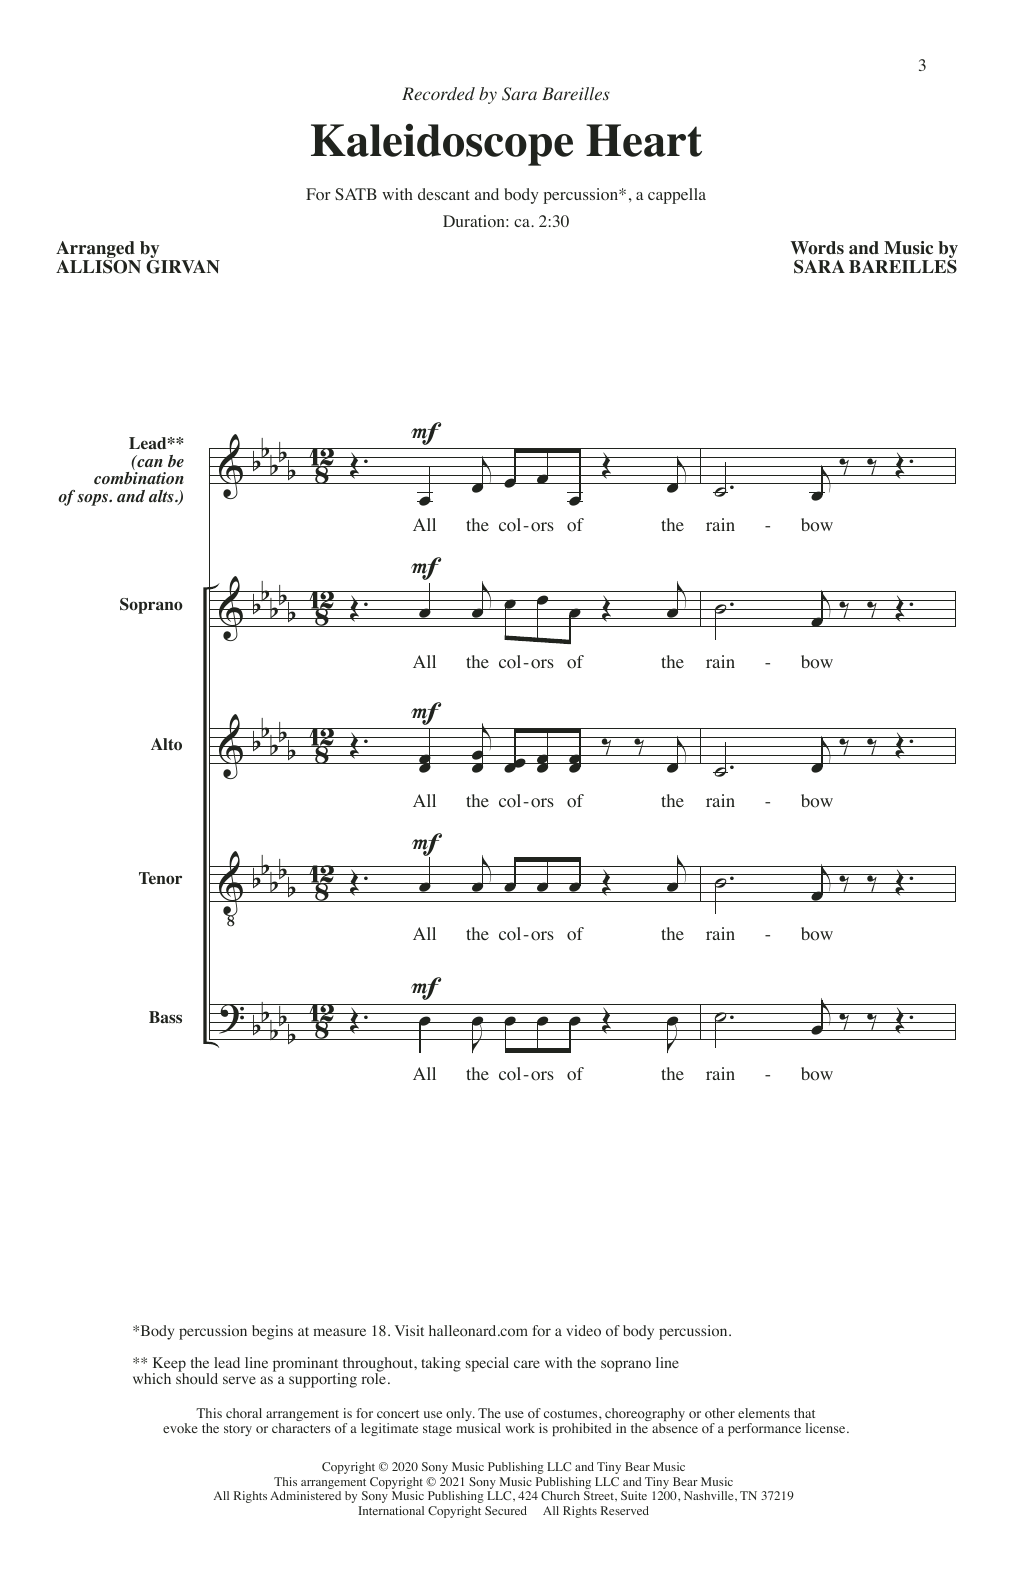 Download Sara Bareilles Kaleidoscope Heart (arr. Allison Girvan) Sheet Music and learn how to play SSA Choir PDF digital score in minutes